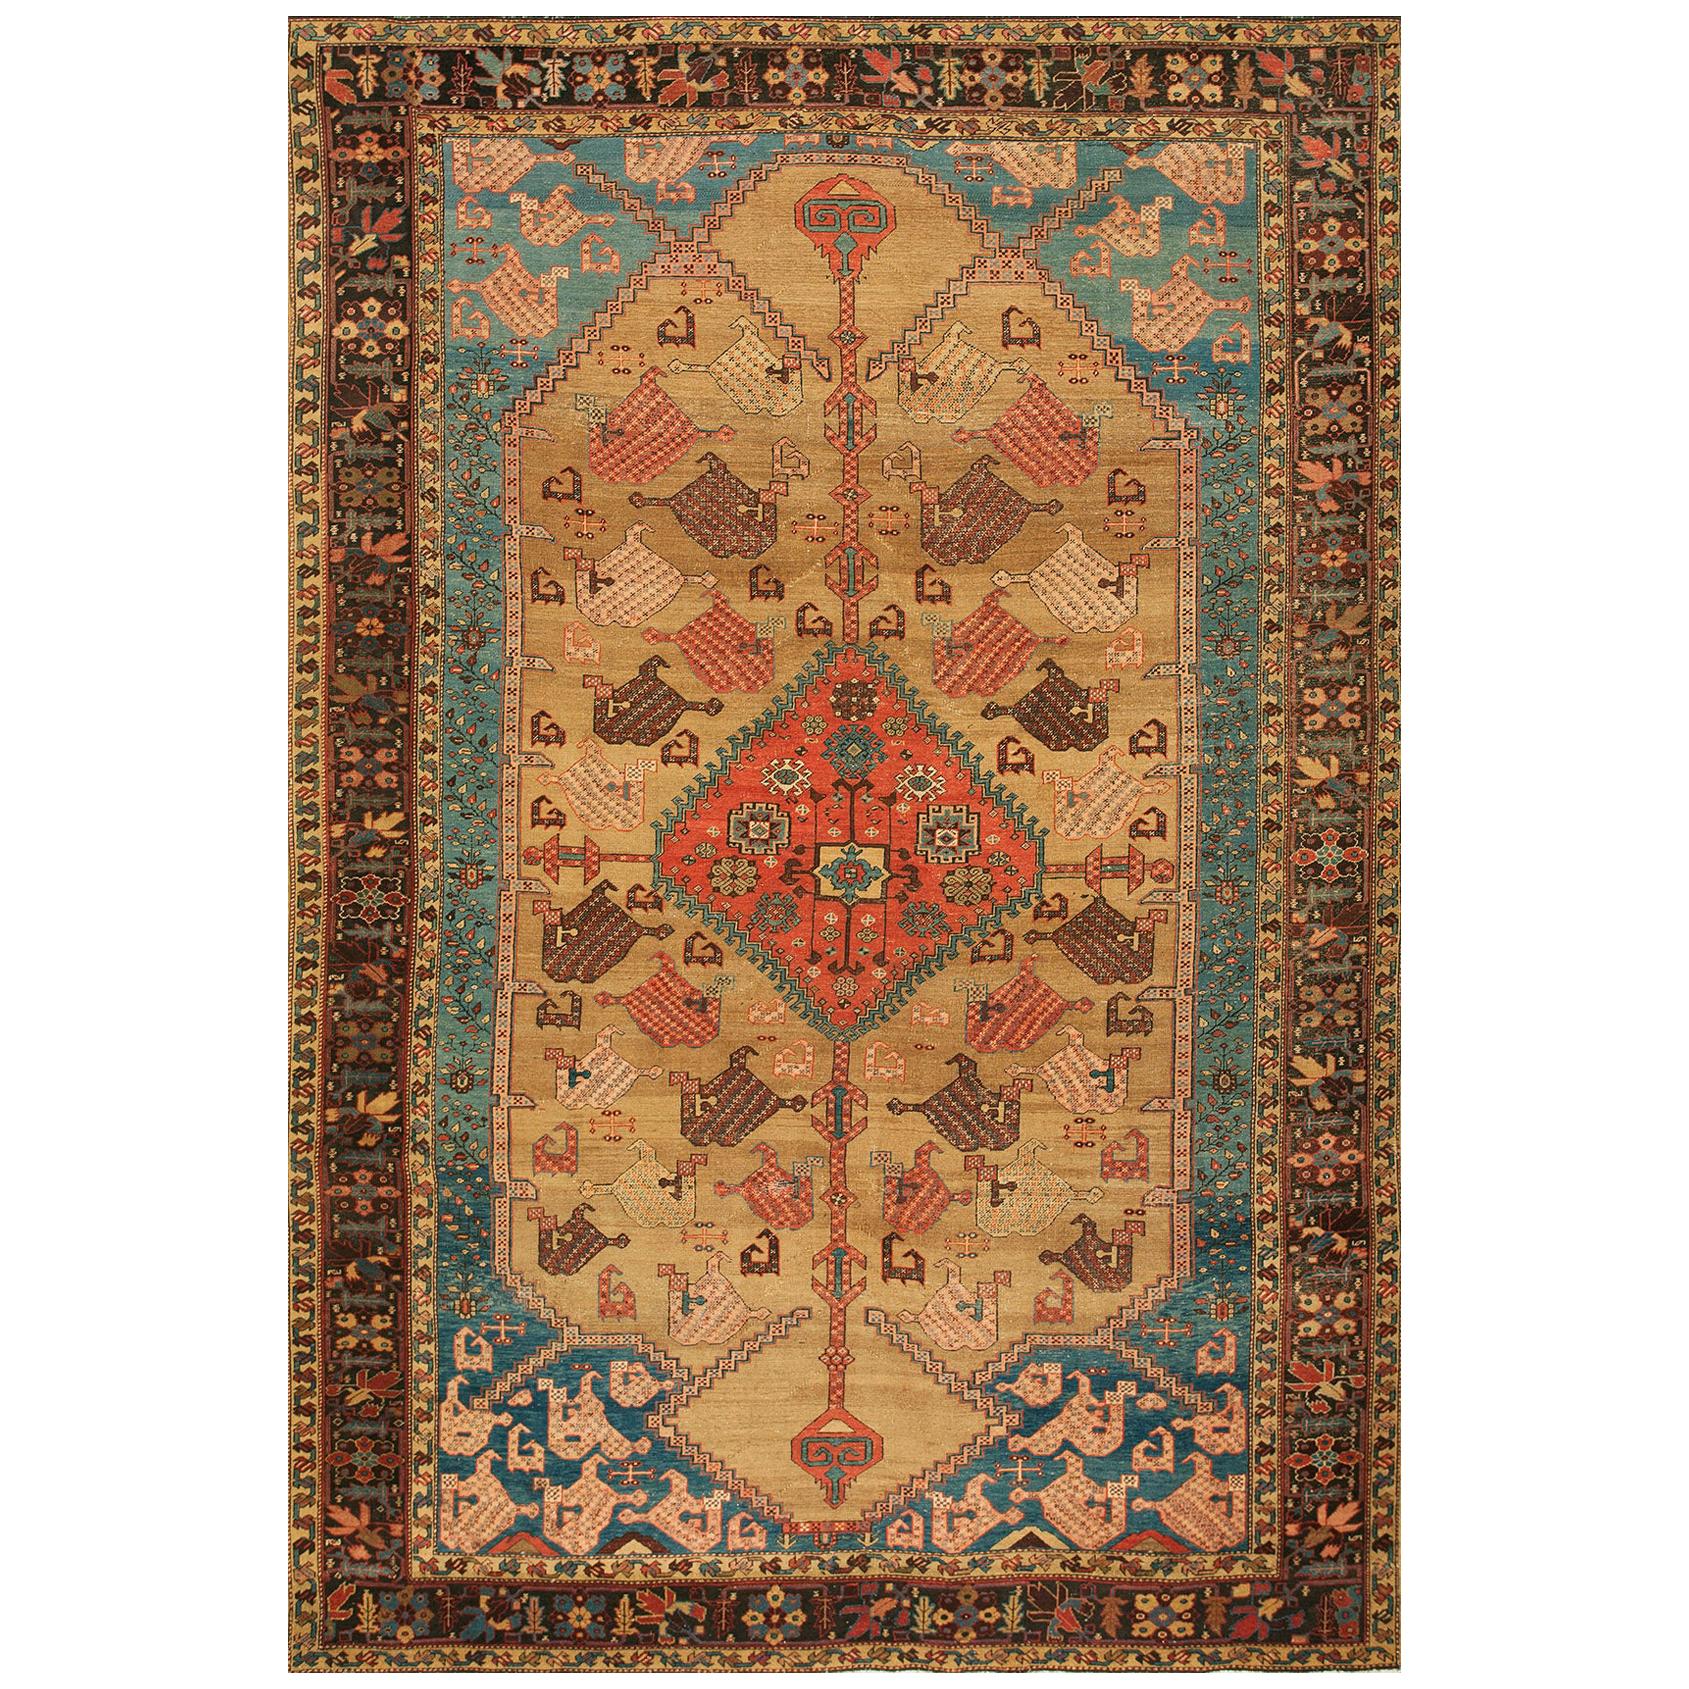 19th Century N.W. Persian Bakshaiesh Carpet ( 7'6" x 11'4" - 230 x 345 ) For Sale